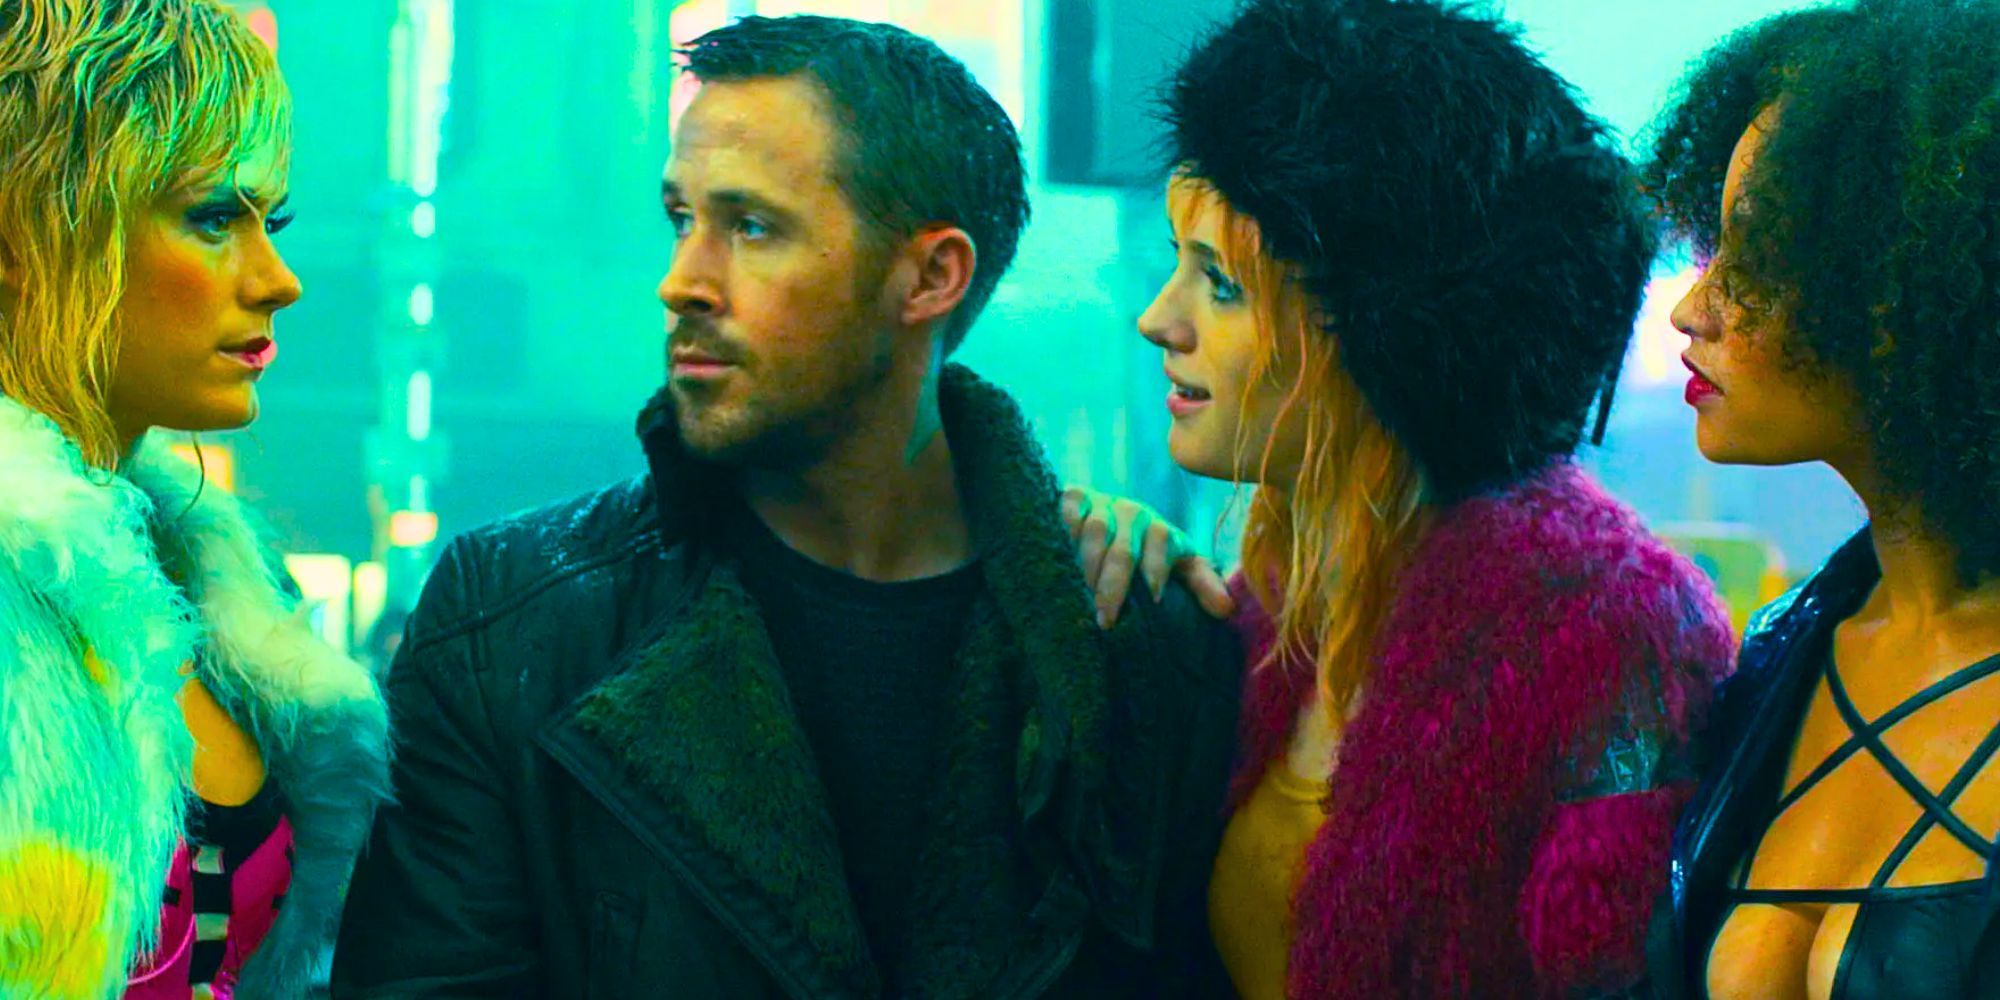 Ryan Gosling as Agent K surrounded by women in Blade Runner 2049